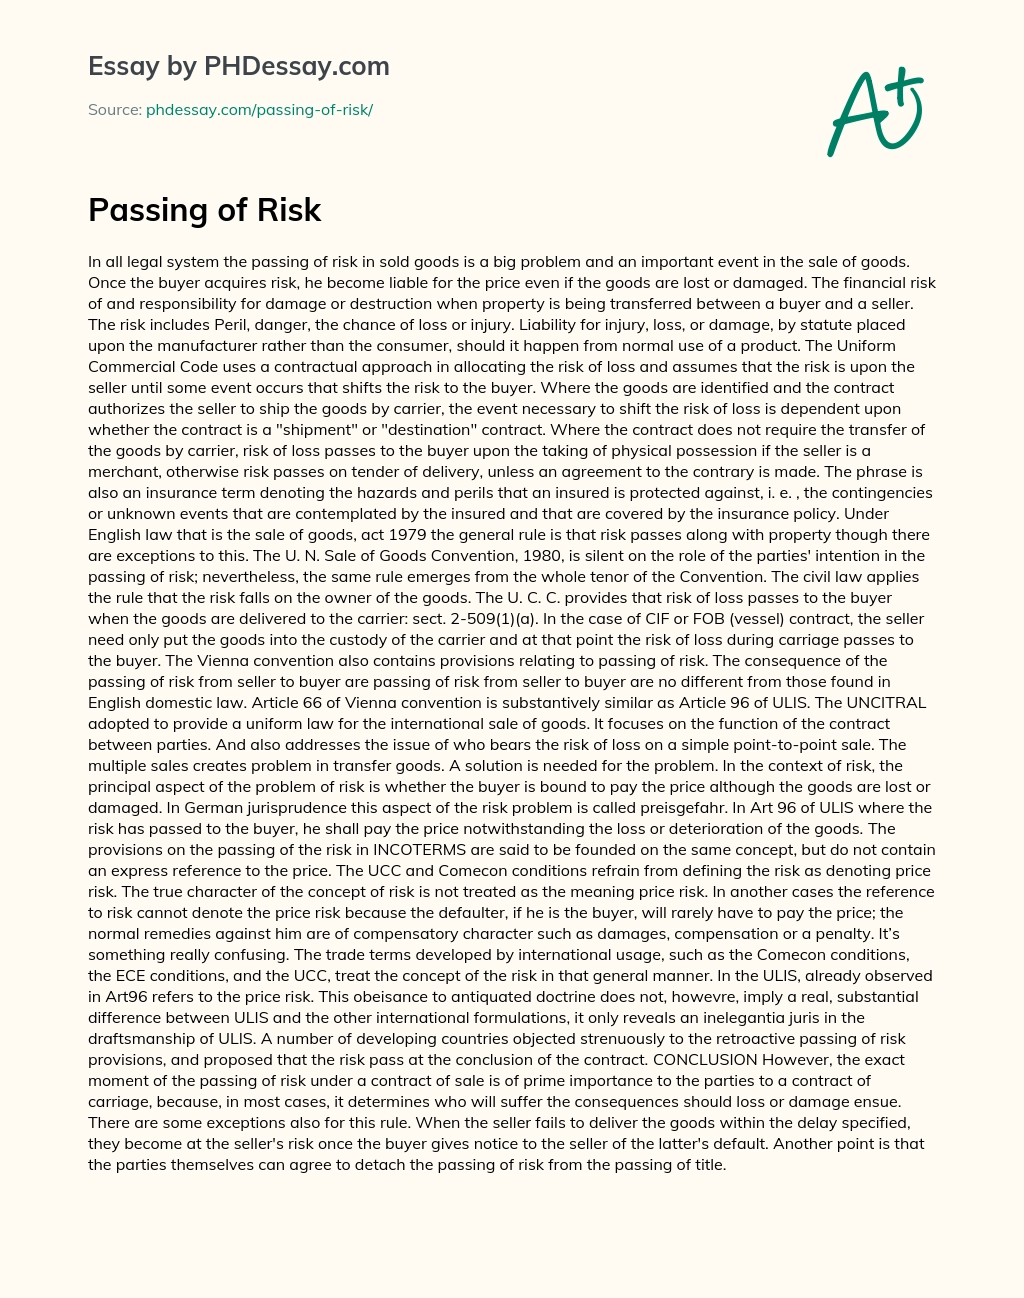 Passing of Risk essay